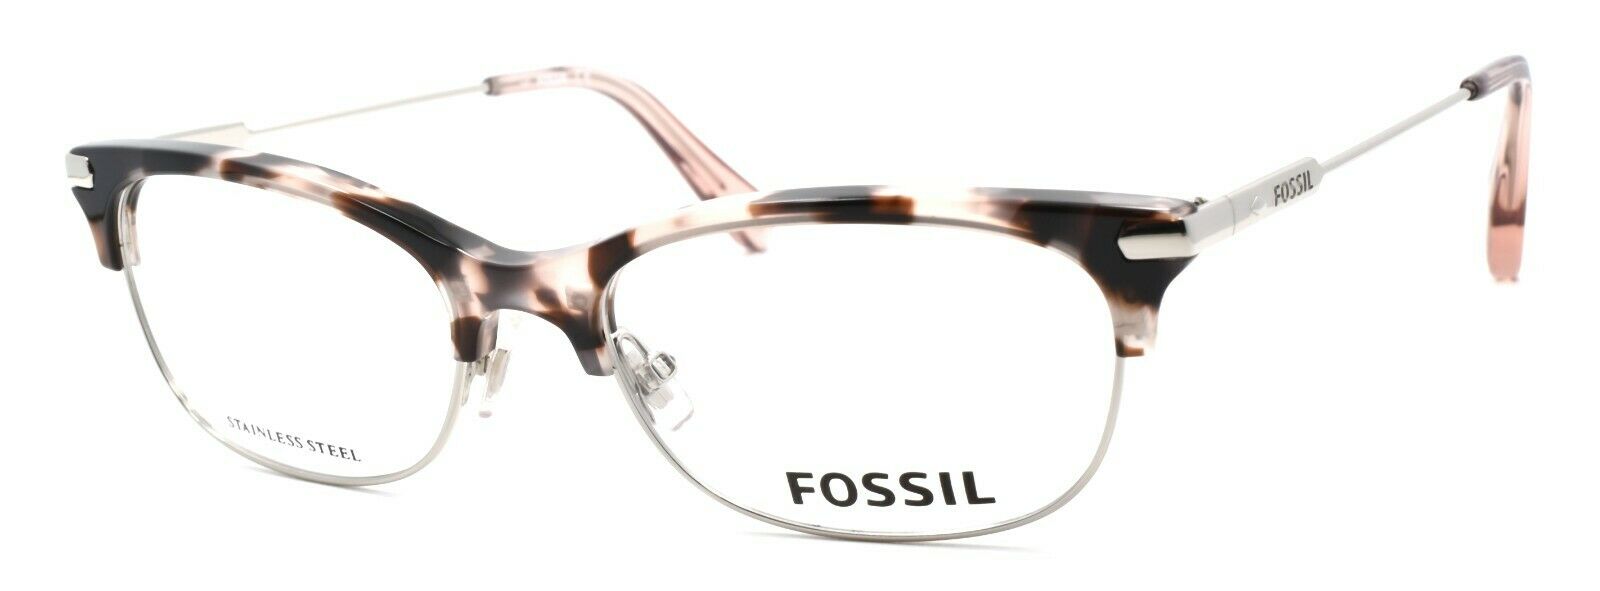 1-Fossil FOS 6055 OIN Women's Eyeglasses Frames 52-17-145 Palladium Blush Tortoise-716737796382-IKSpecs